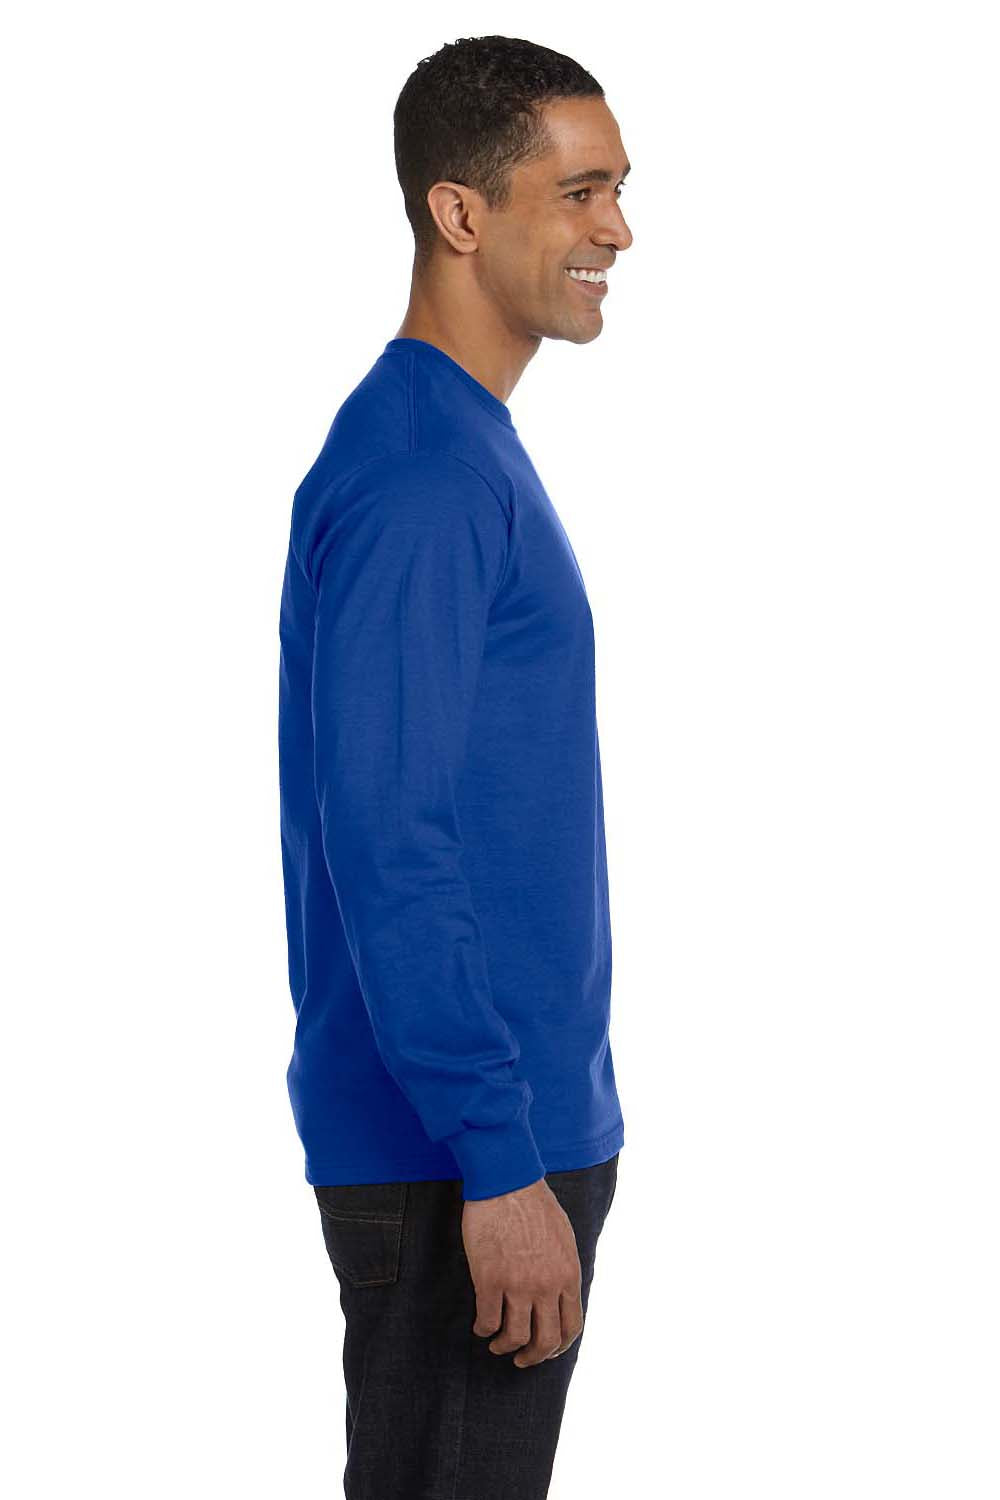 Hanes 5286 Mens ComfortSoft Long Sleeve Crewneck T-Shirt Royal Blue Side